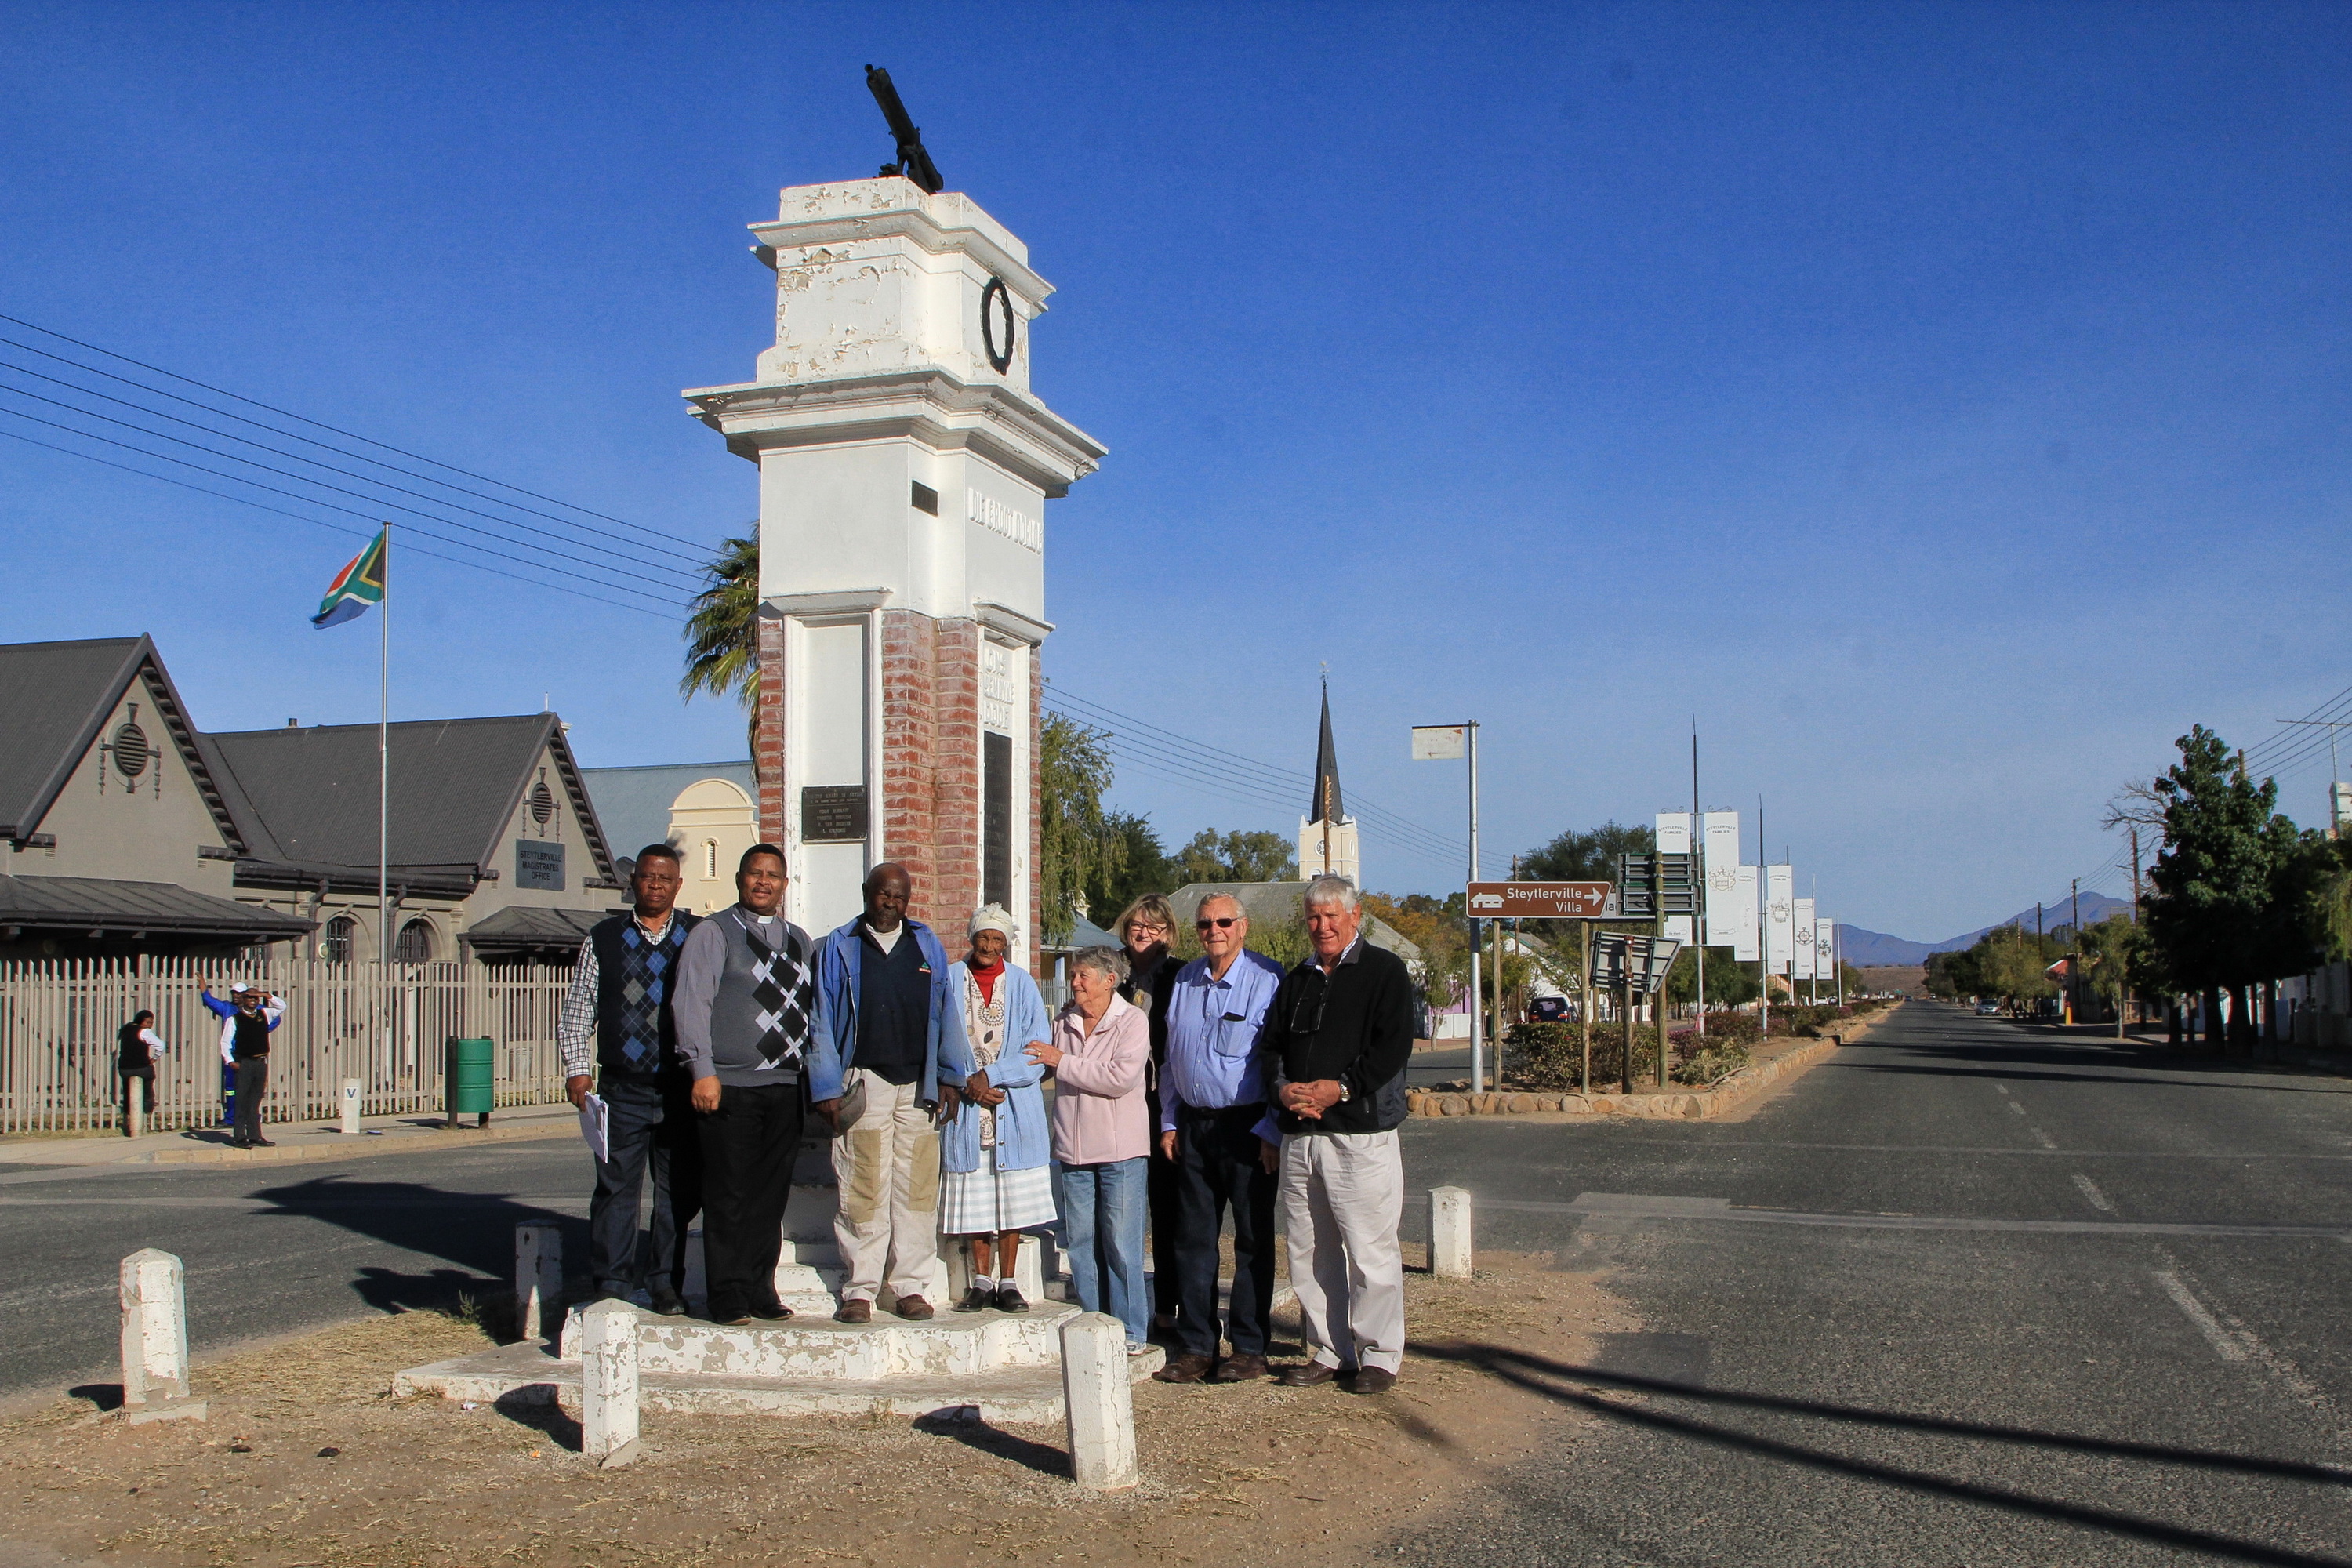 The Matabatas, Mapoes, Kirkman-Middletons, Linda Henderson and Danie Bezuidenhout gathering under the Steytlerville War Memorial. Image: Chris Marais